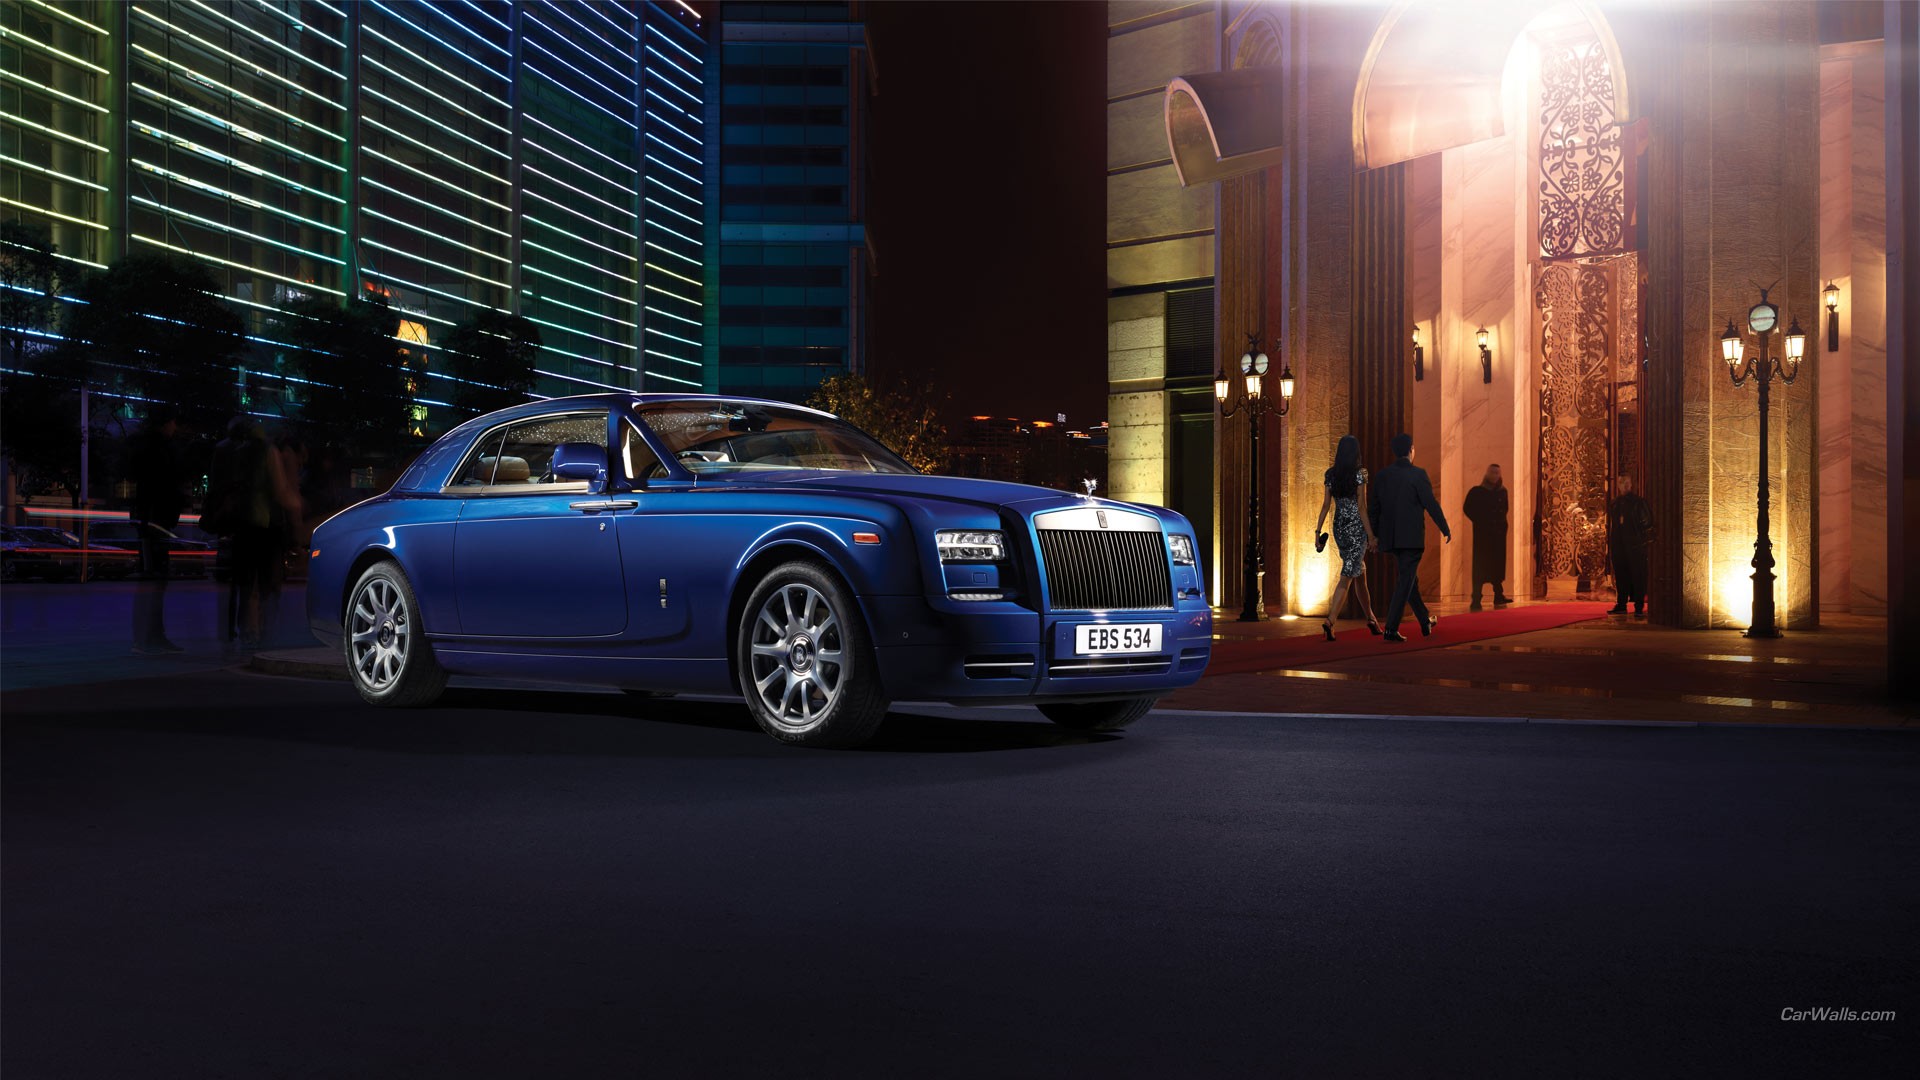 General 1920x1080 car Rolls-Royce Phantom blue cars luxury cars Rolls-Royce vehicle British cars